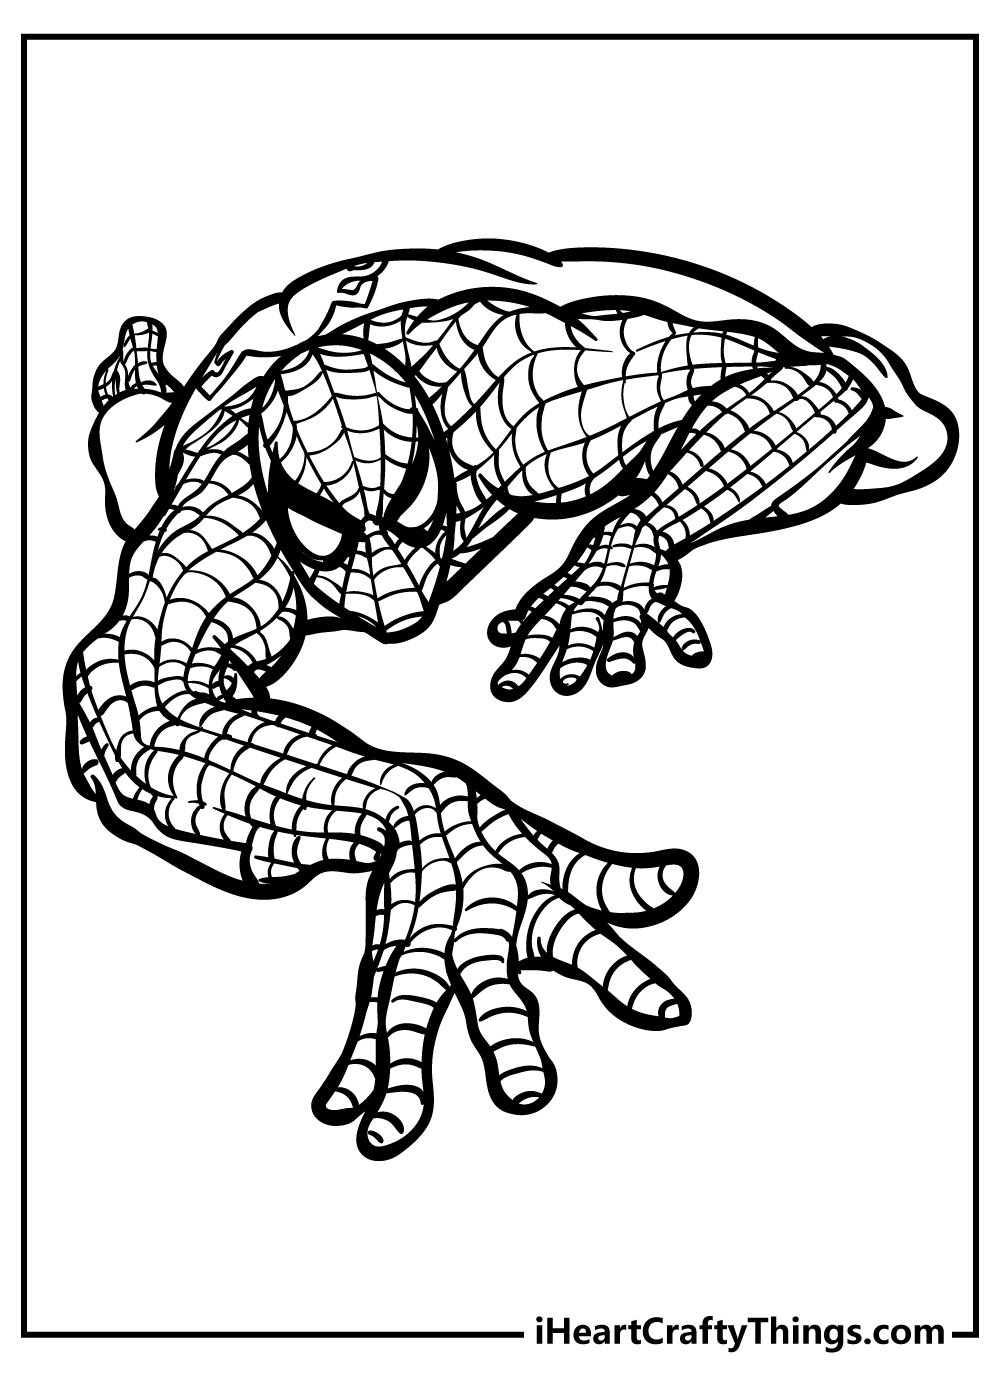 Spider-Man Coloring Original Sheet for children free download